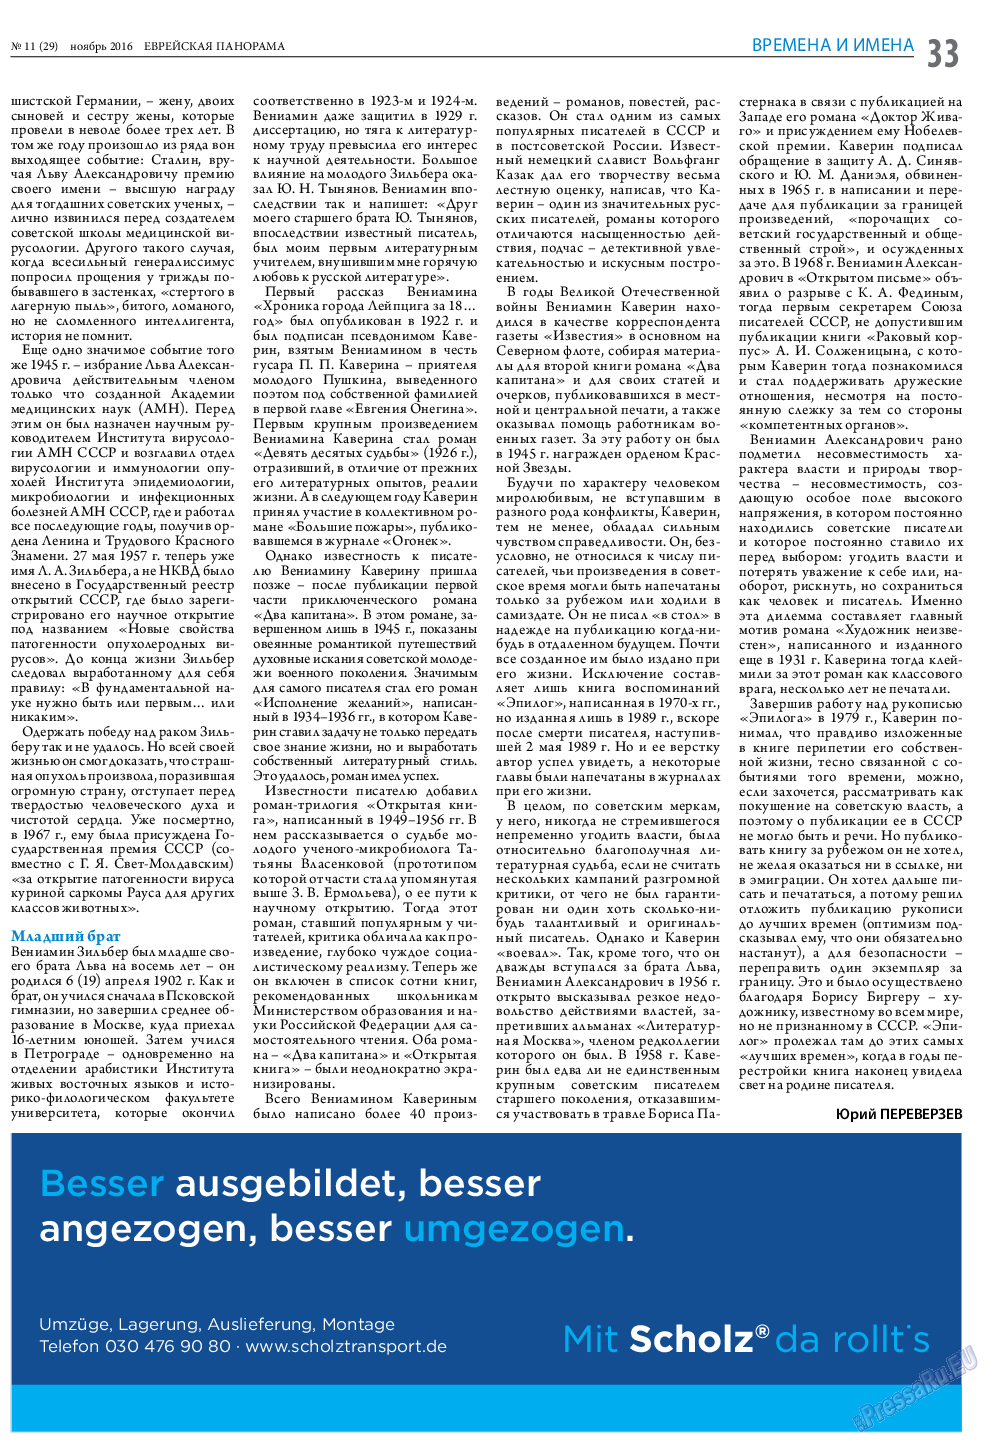 Еврейская панорама, газета. 2016 №11 стр.33